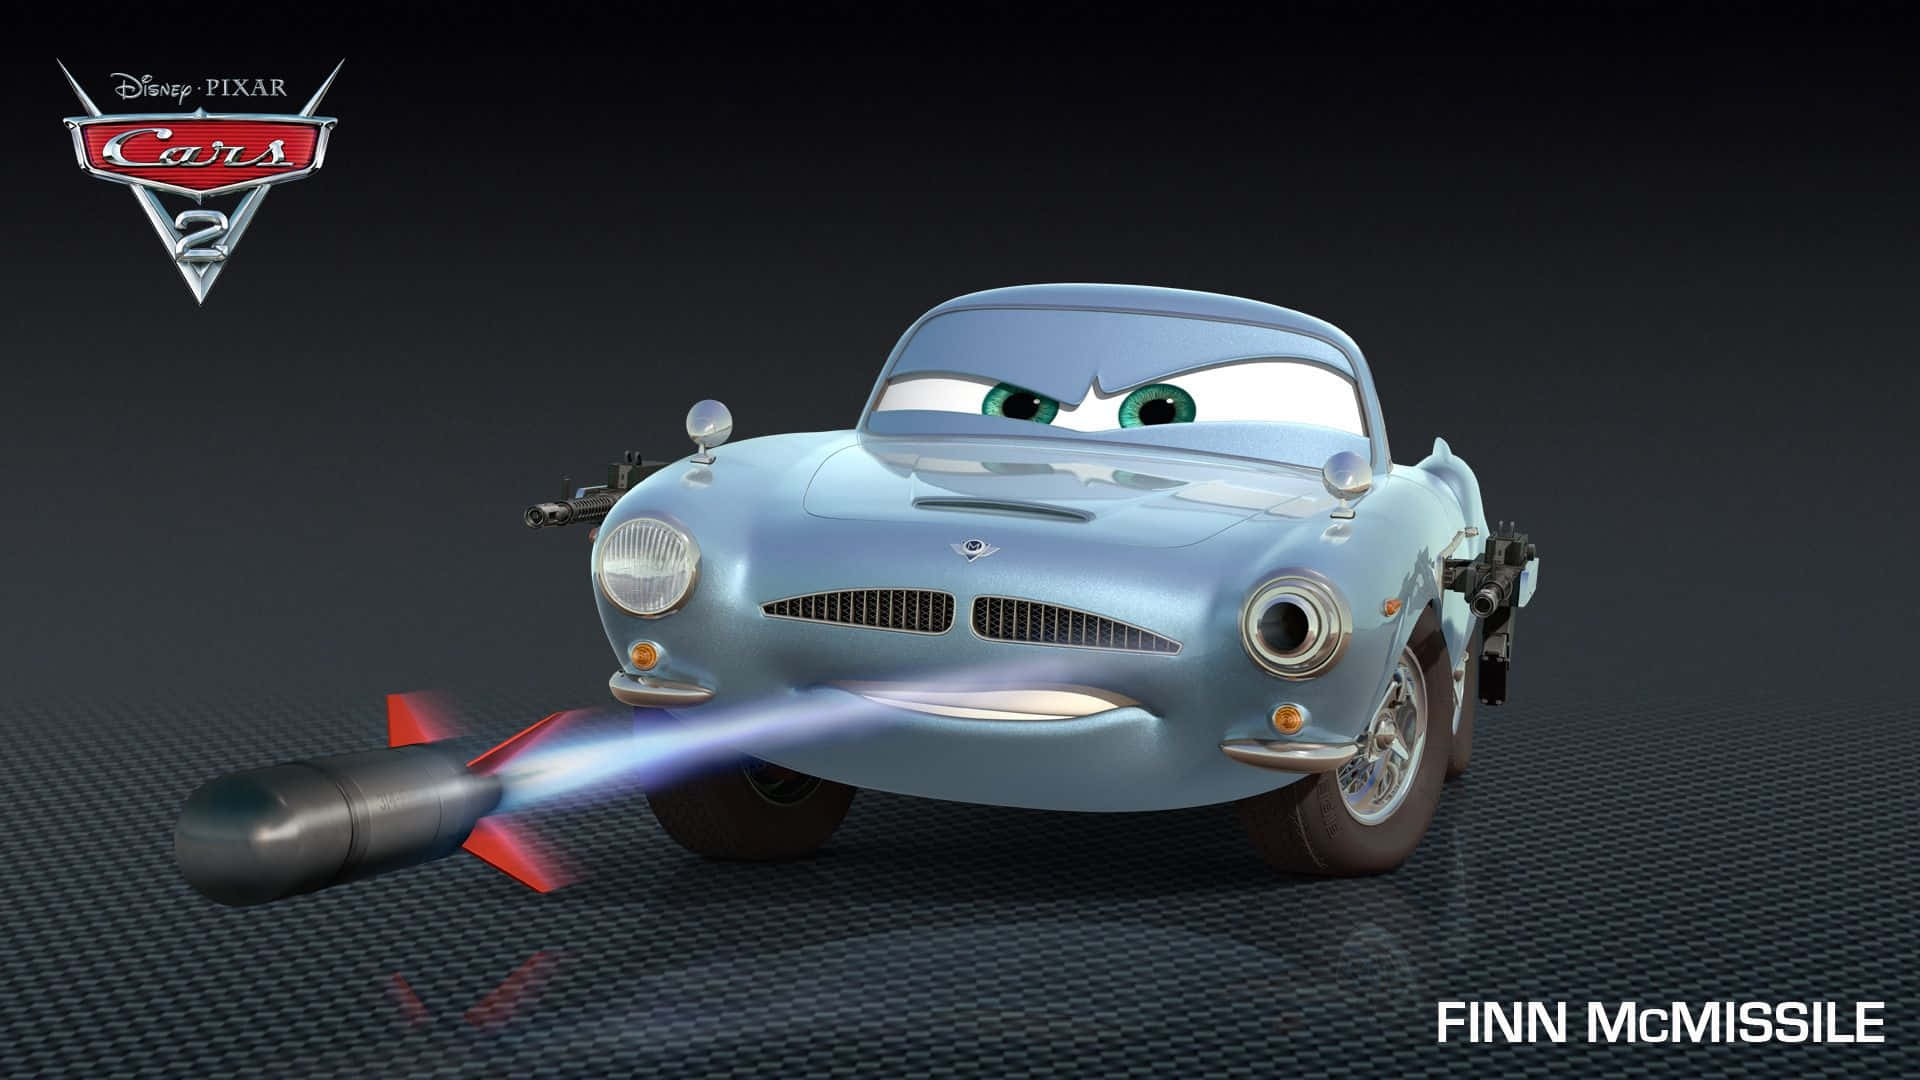 Lightning McQueen is Ready to Race!